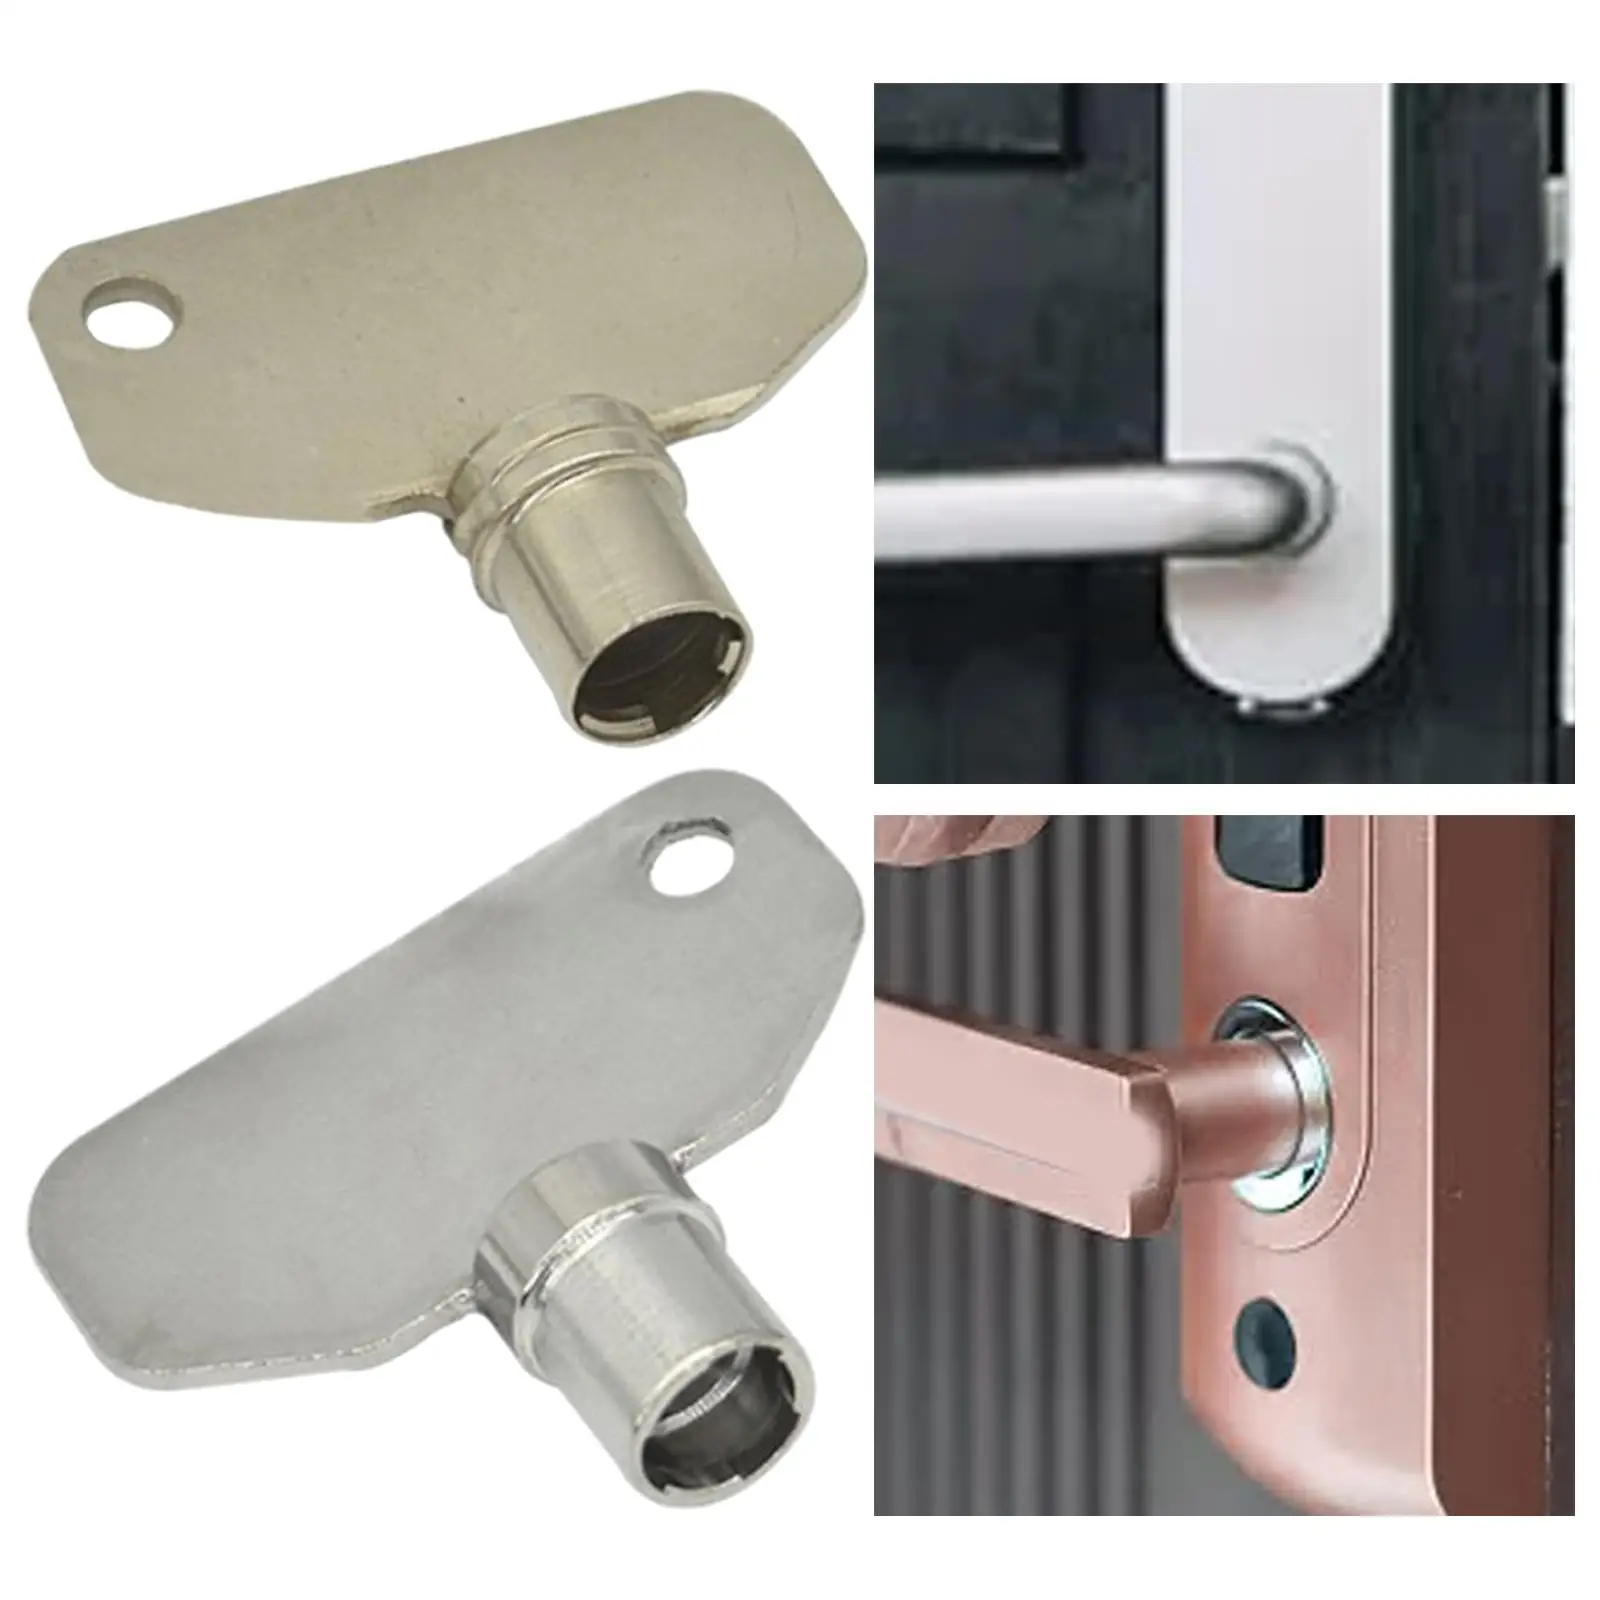 E3-5-1526-75 Barrel Key Tubular Key Hollow  for RV Motorhome Zinc  Finish Baggage Door Hardware Locking Devices